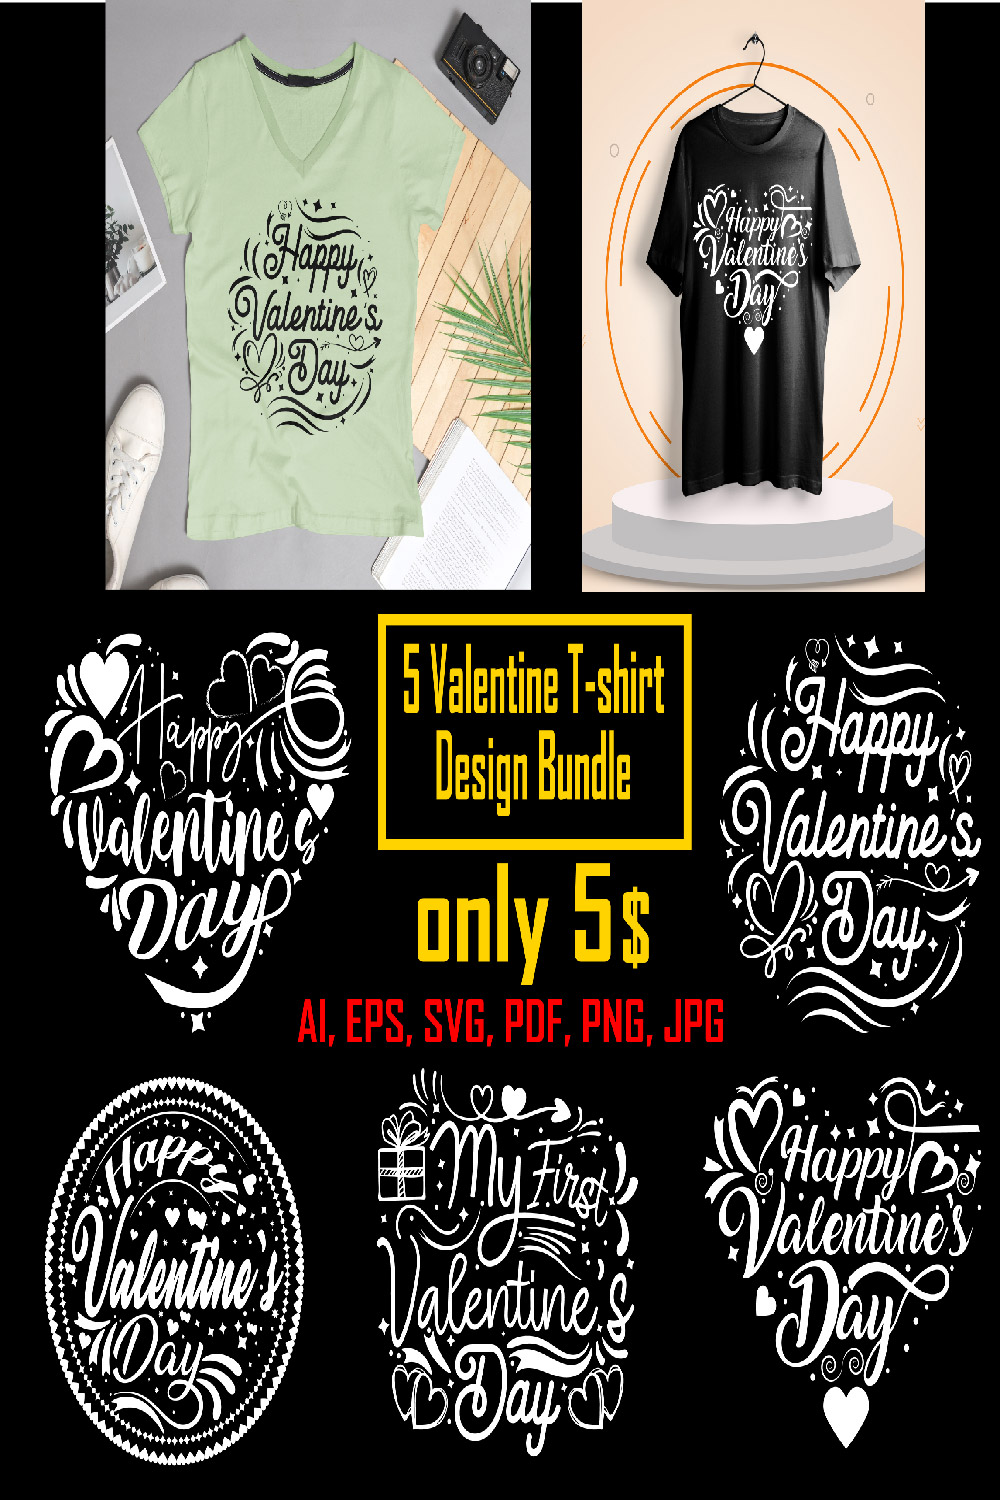 Valentines Day Typography, Vector T-Shirt Master Bundles - Pinterest.